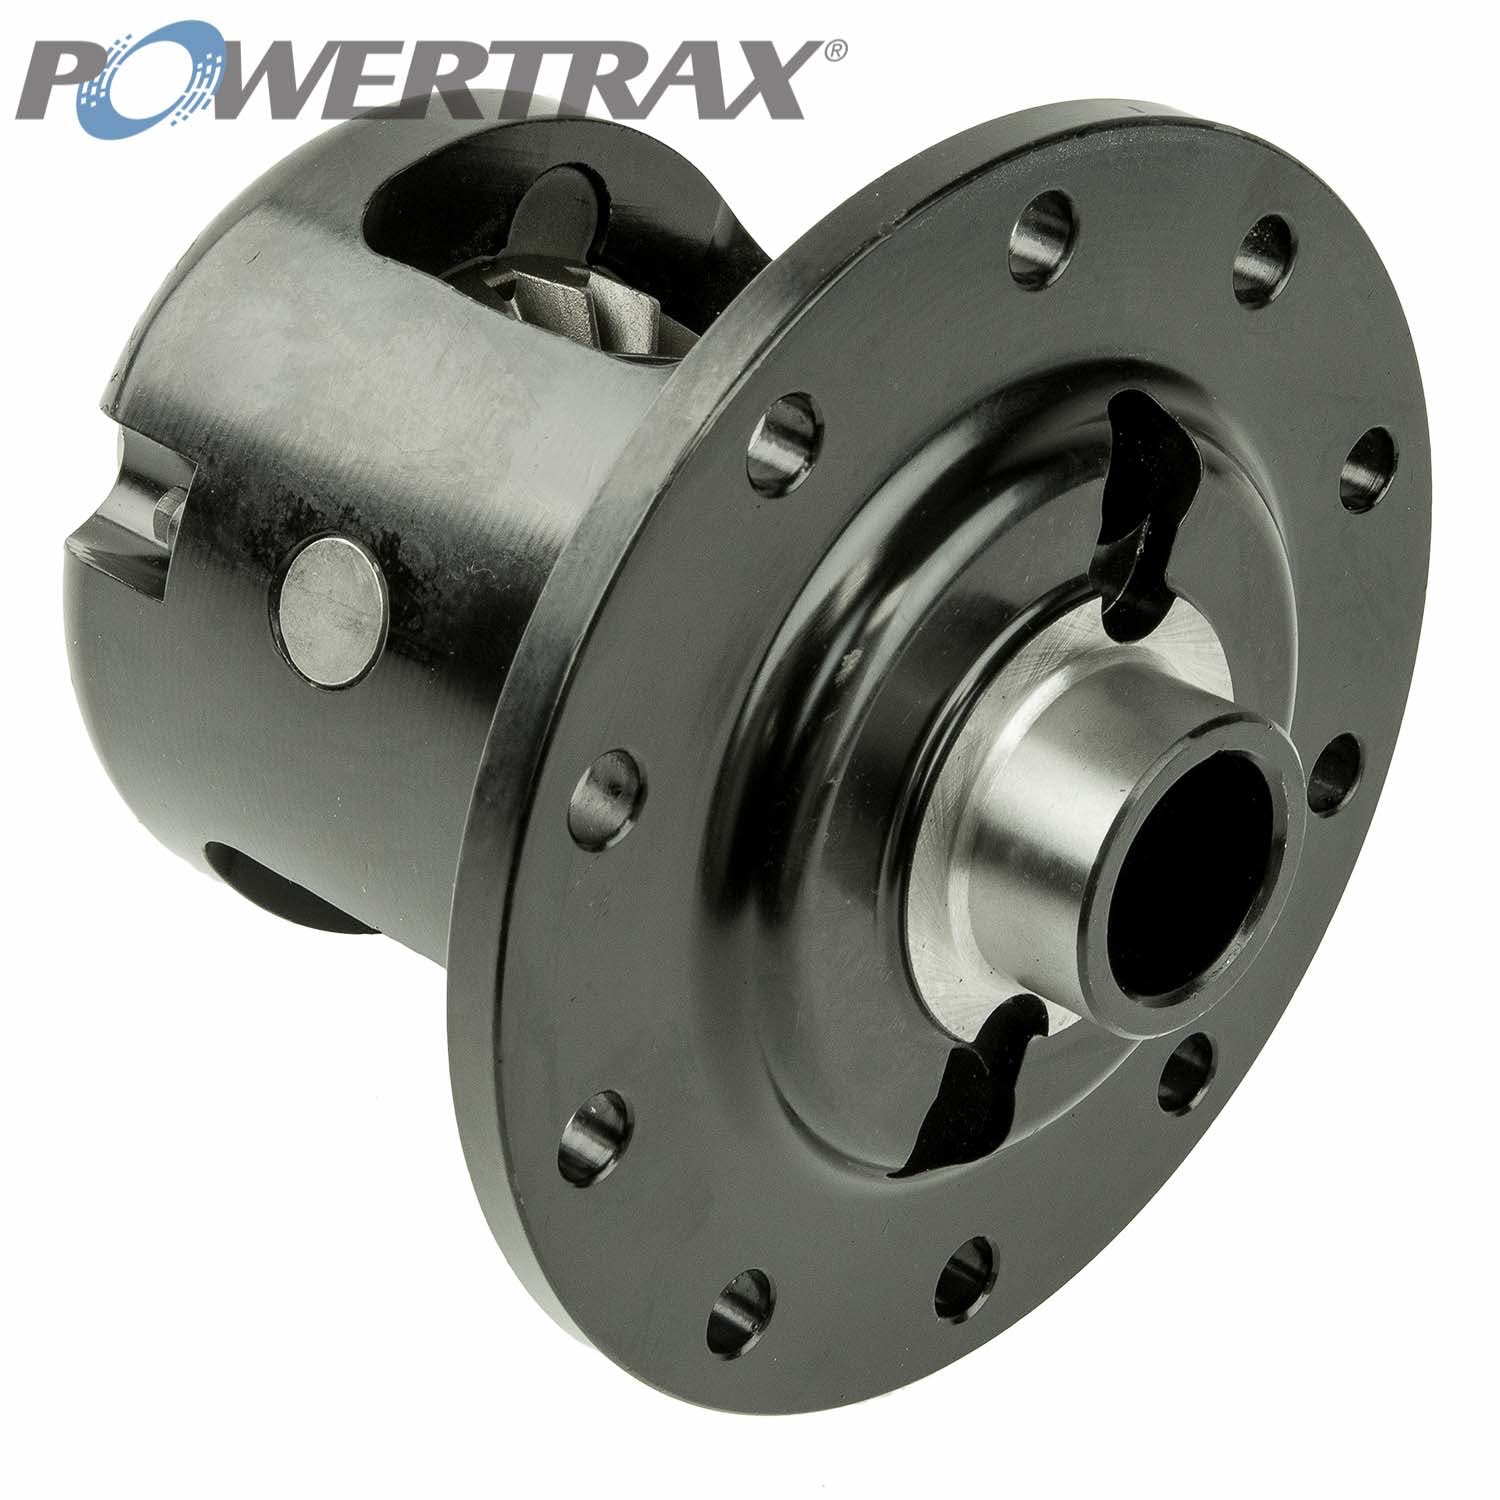 PowerTrax LS201030 Powertrax - Grip LS Traction System